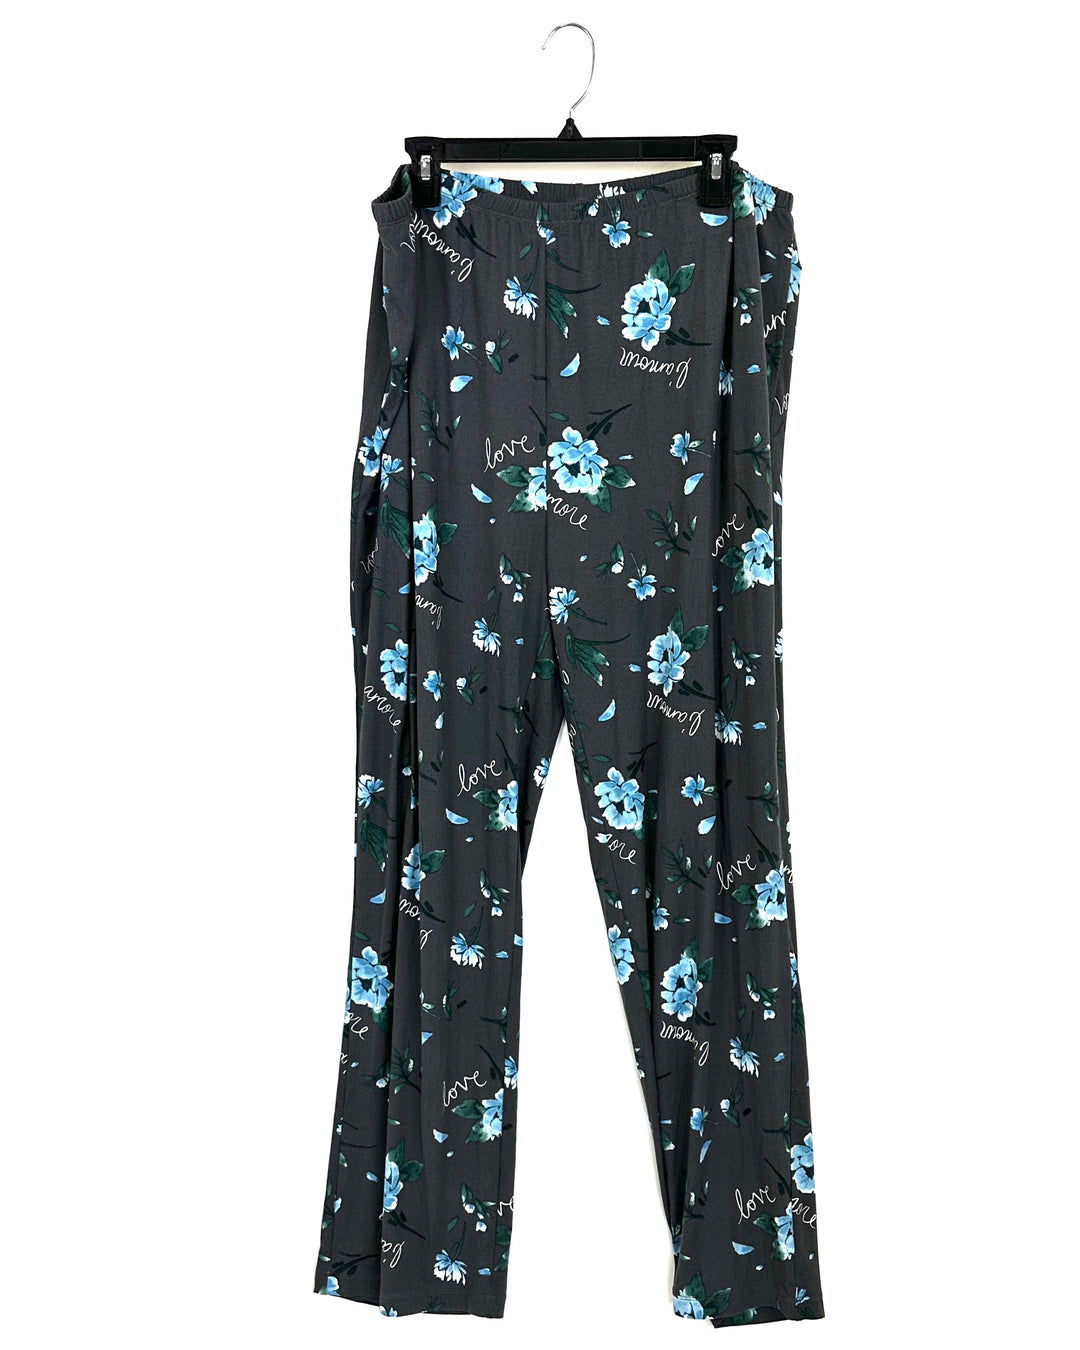 Charcoal Floral Pajama Set - 1x